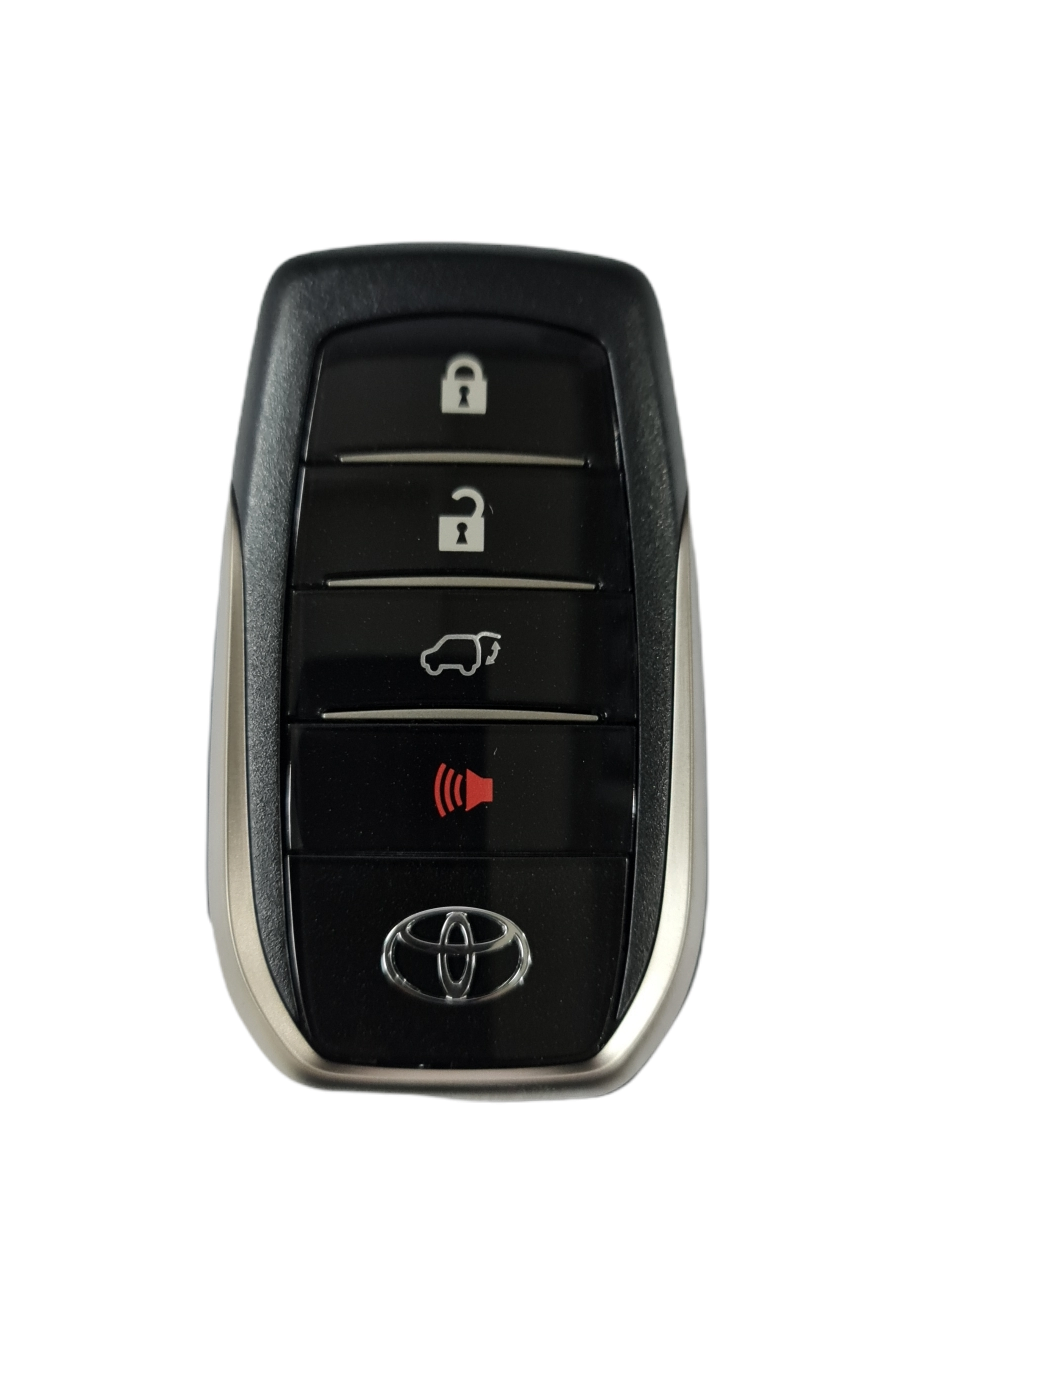 Carcasa Toyota Land Cruiser Proximidad 4 botones